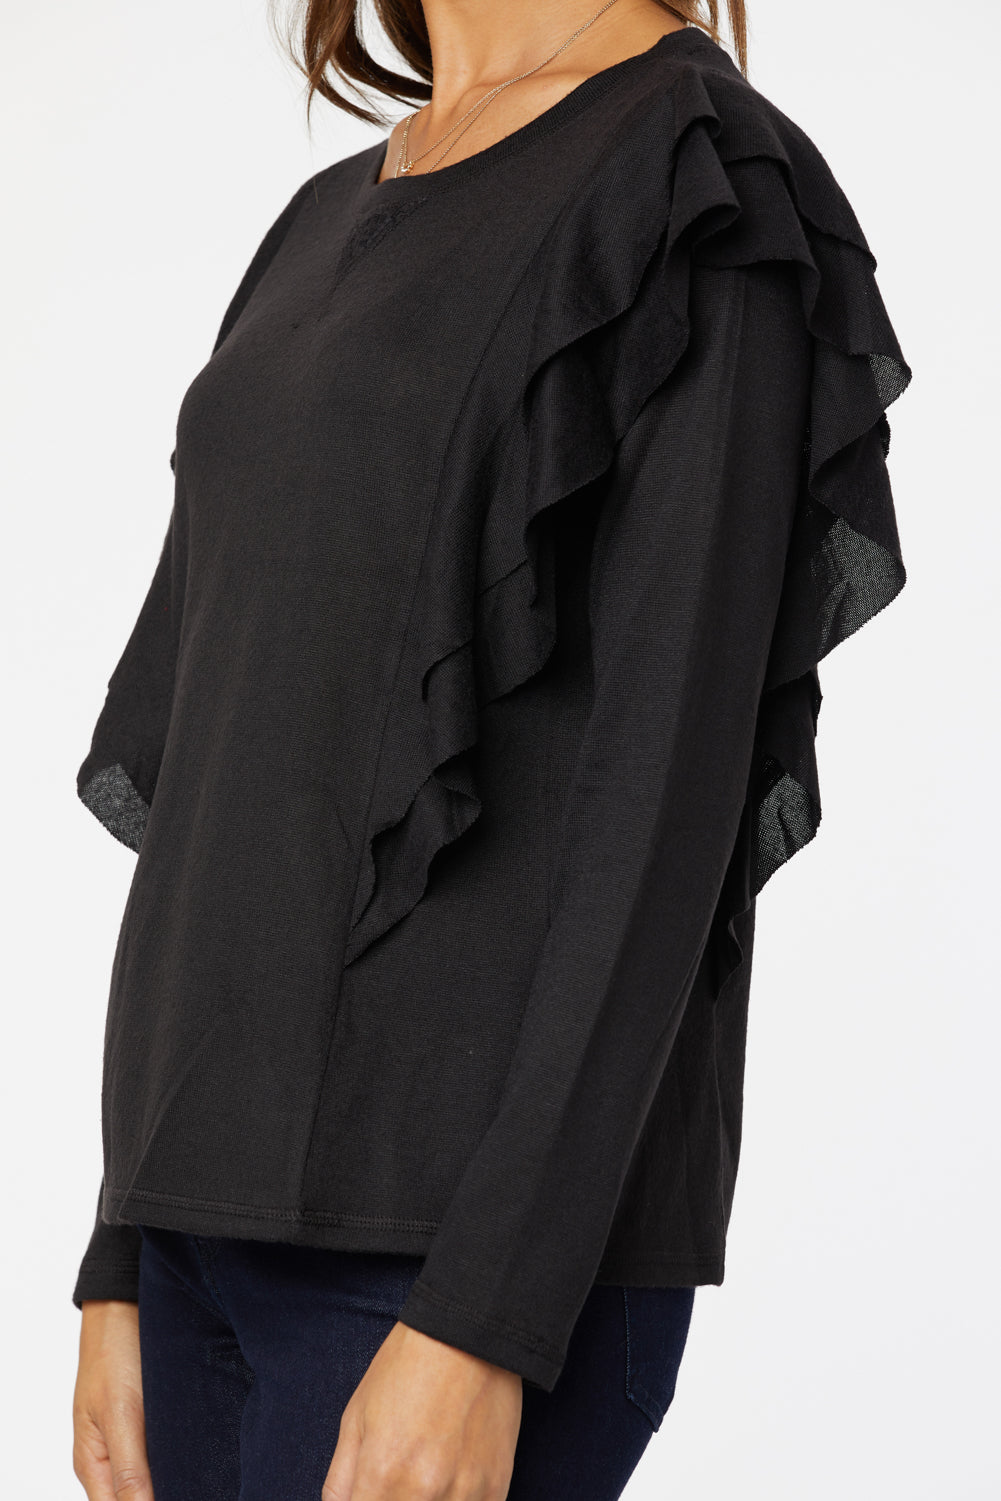 NYDJ Ruffled Long Sleeved Top  - Black Combo